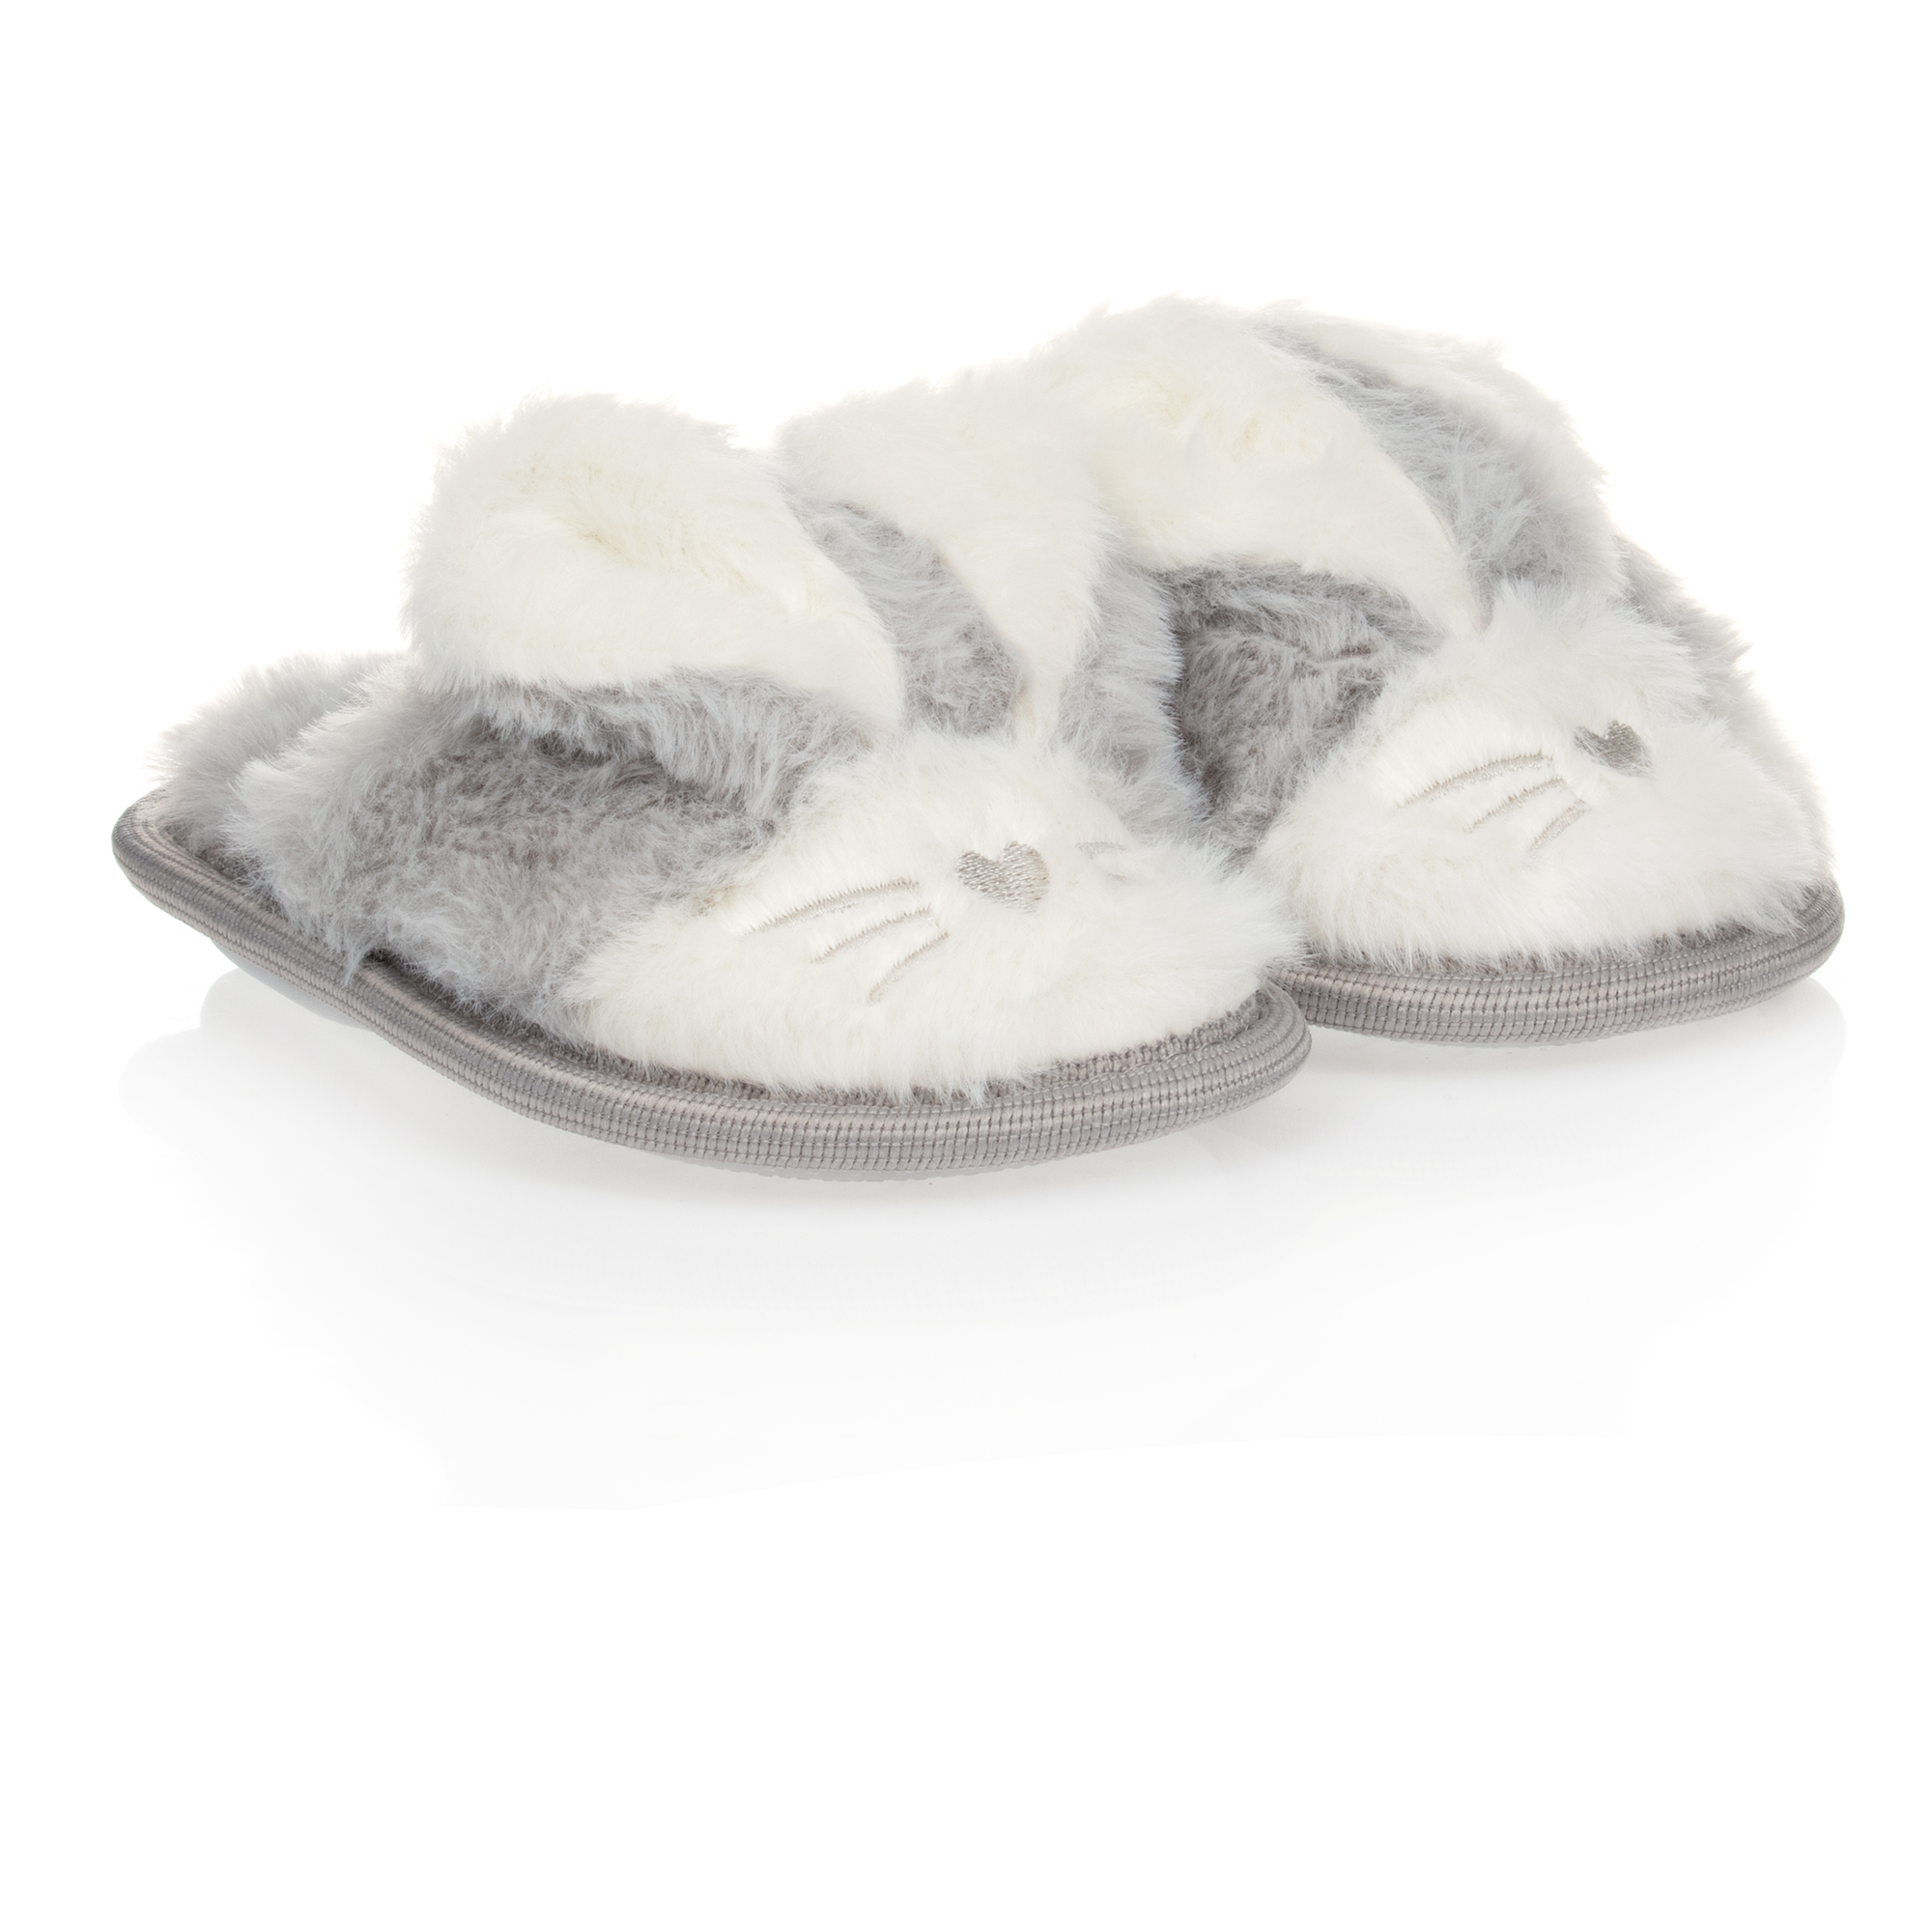 baby girl bunny slippers